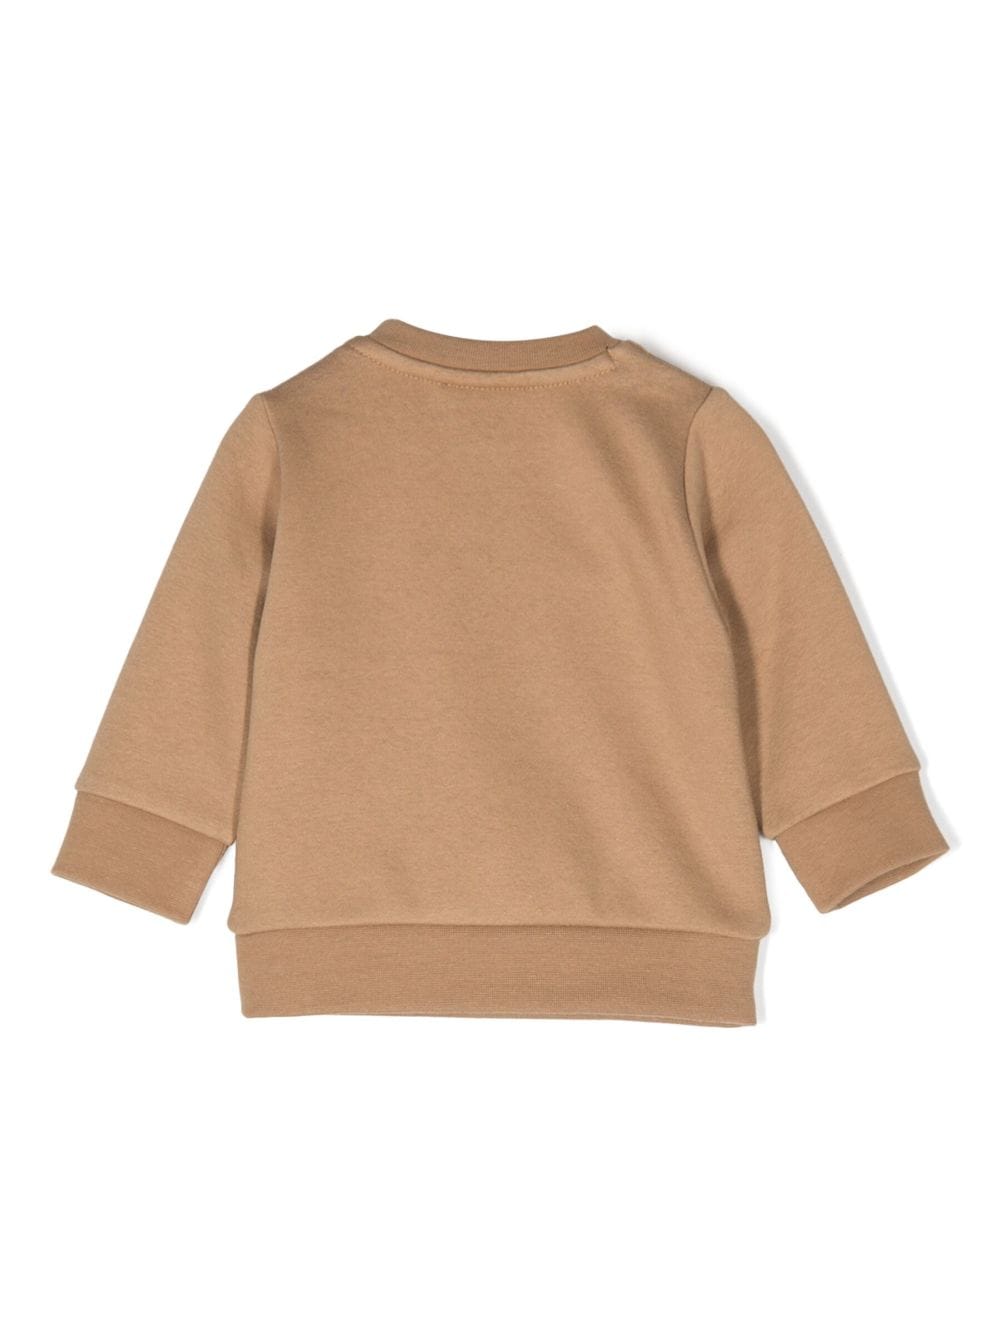 Beige cotton blend baby boy HUGO BOSS sweatshirt